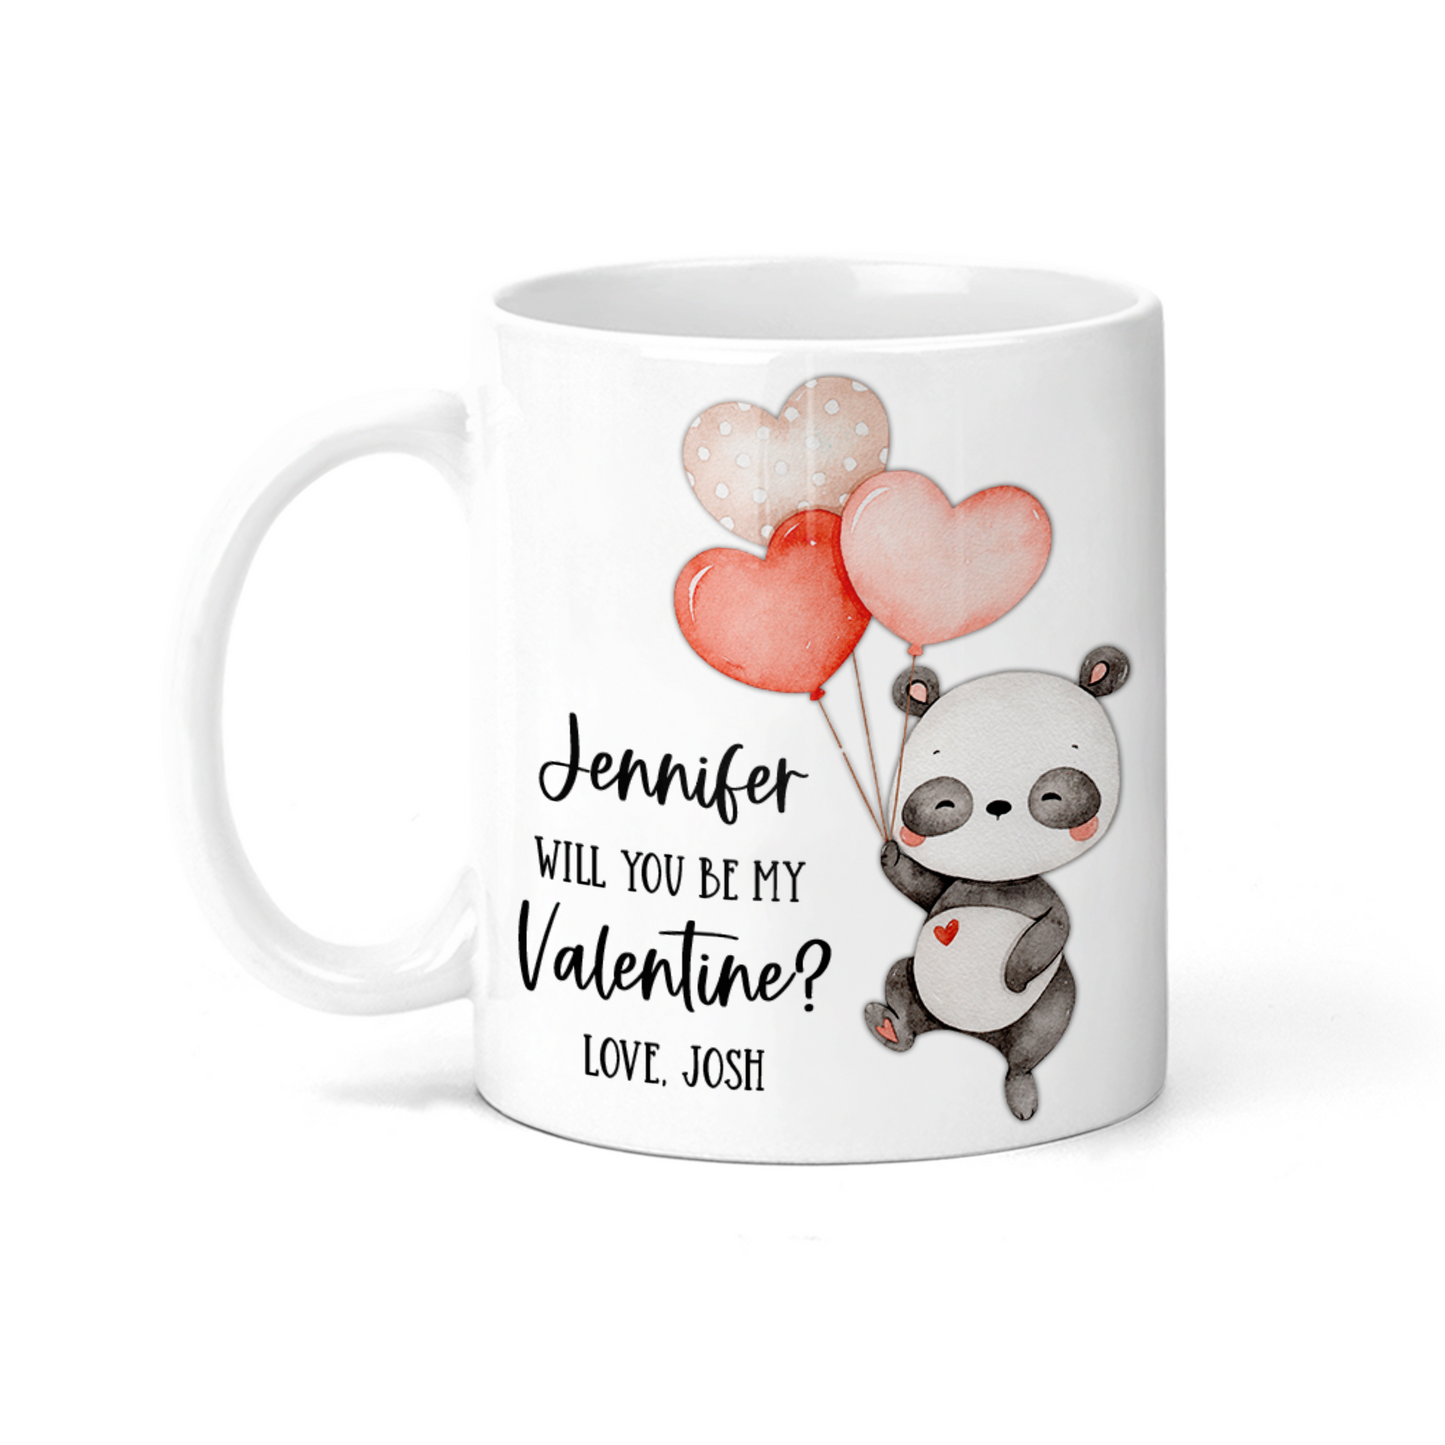 Personalized Be My Valentine Mug - Panda With Heart Balloons - M0602